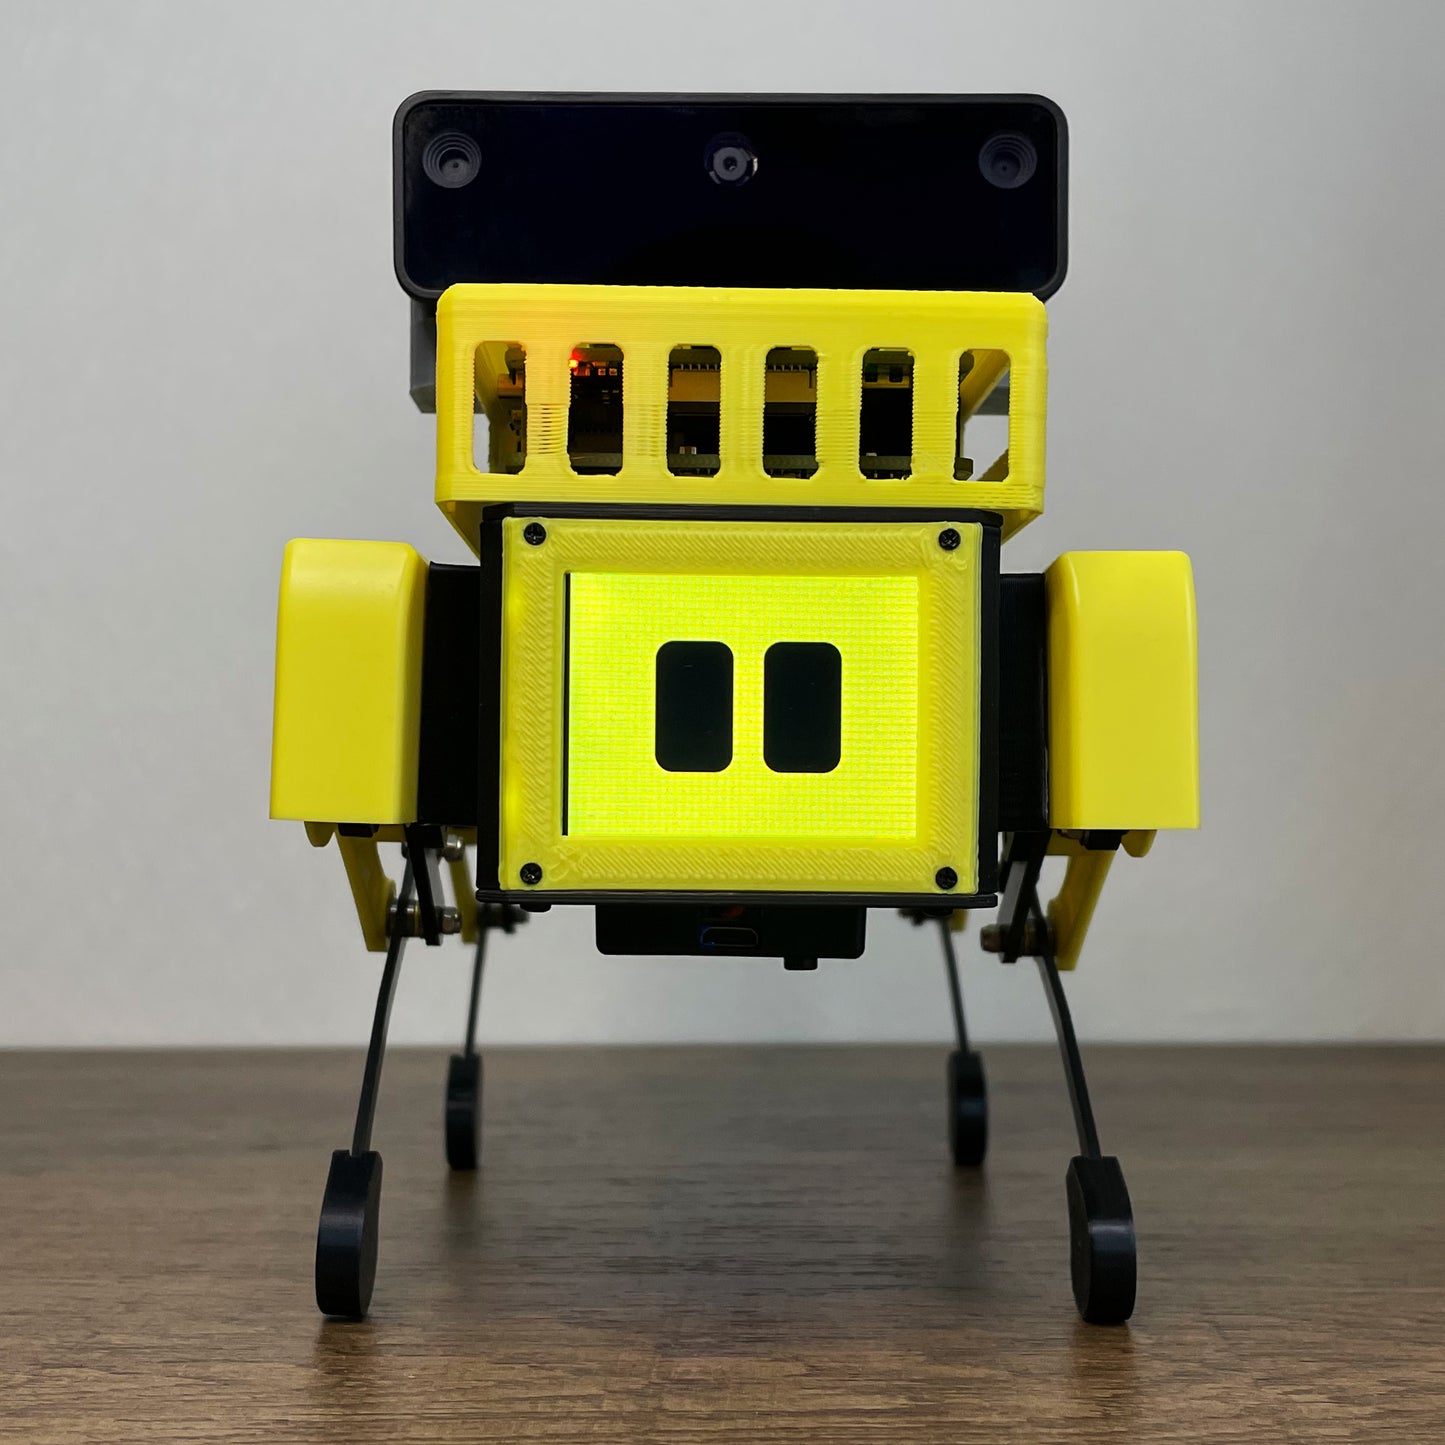 MangDang Mini Pupper: AI Robot, Smart Robot, Quadruped Robot, Educational Robot, Genuine, Open-Source, STEM, K12